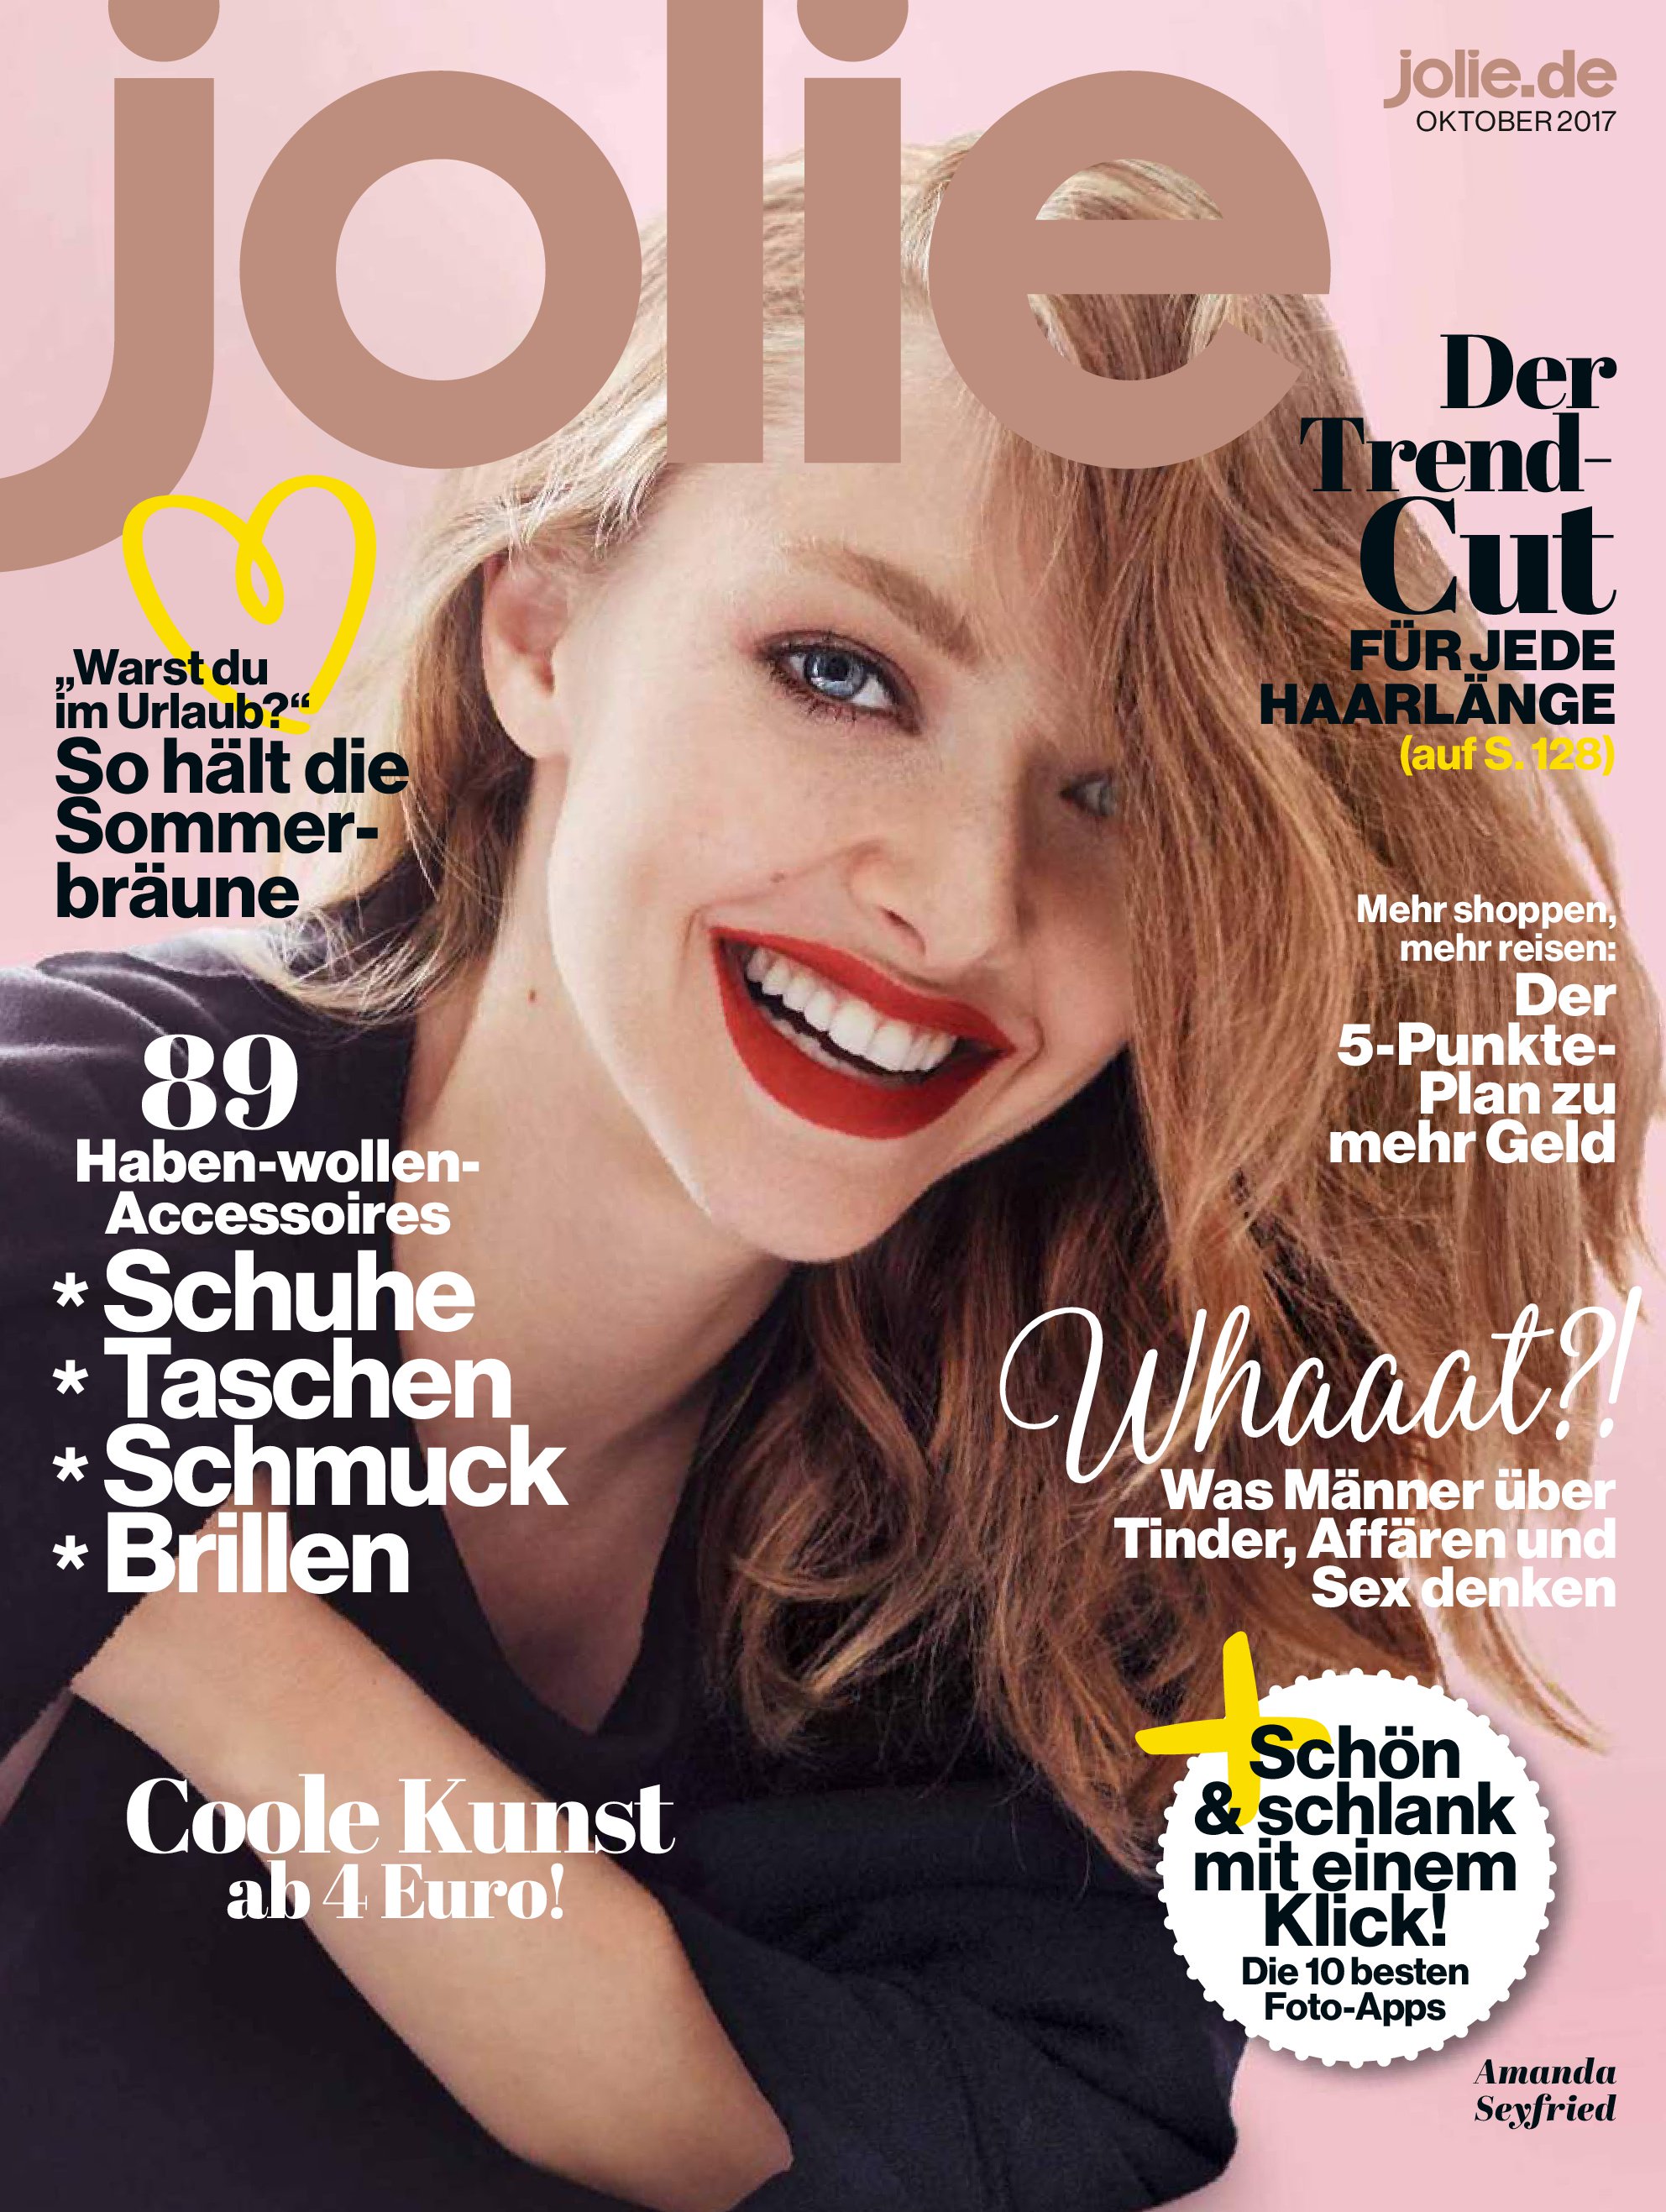 amanda-seyfried-jolie-magazine-germany-october-2017.jpg